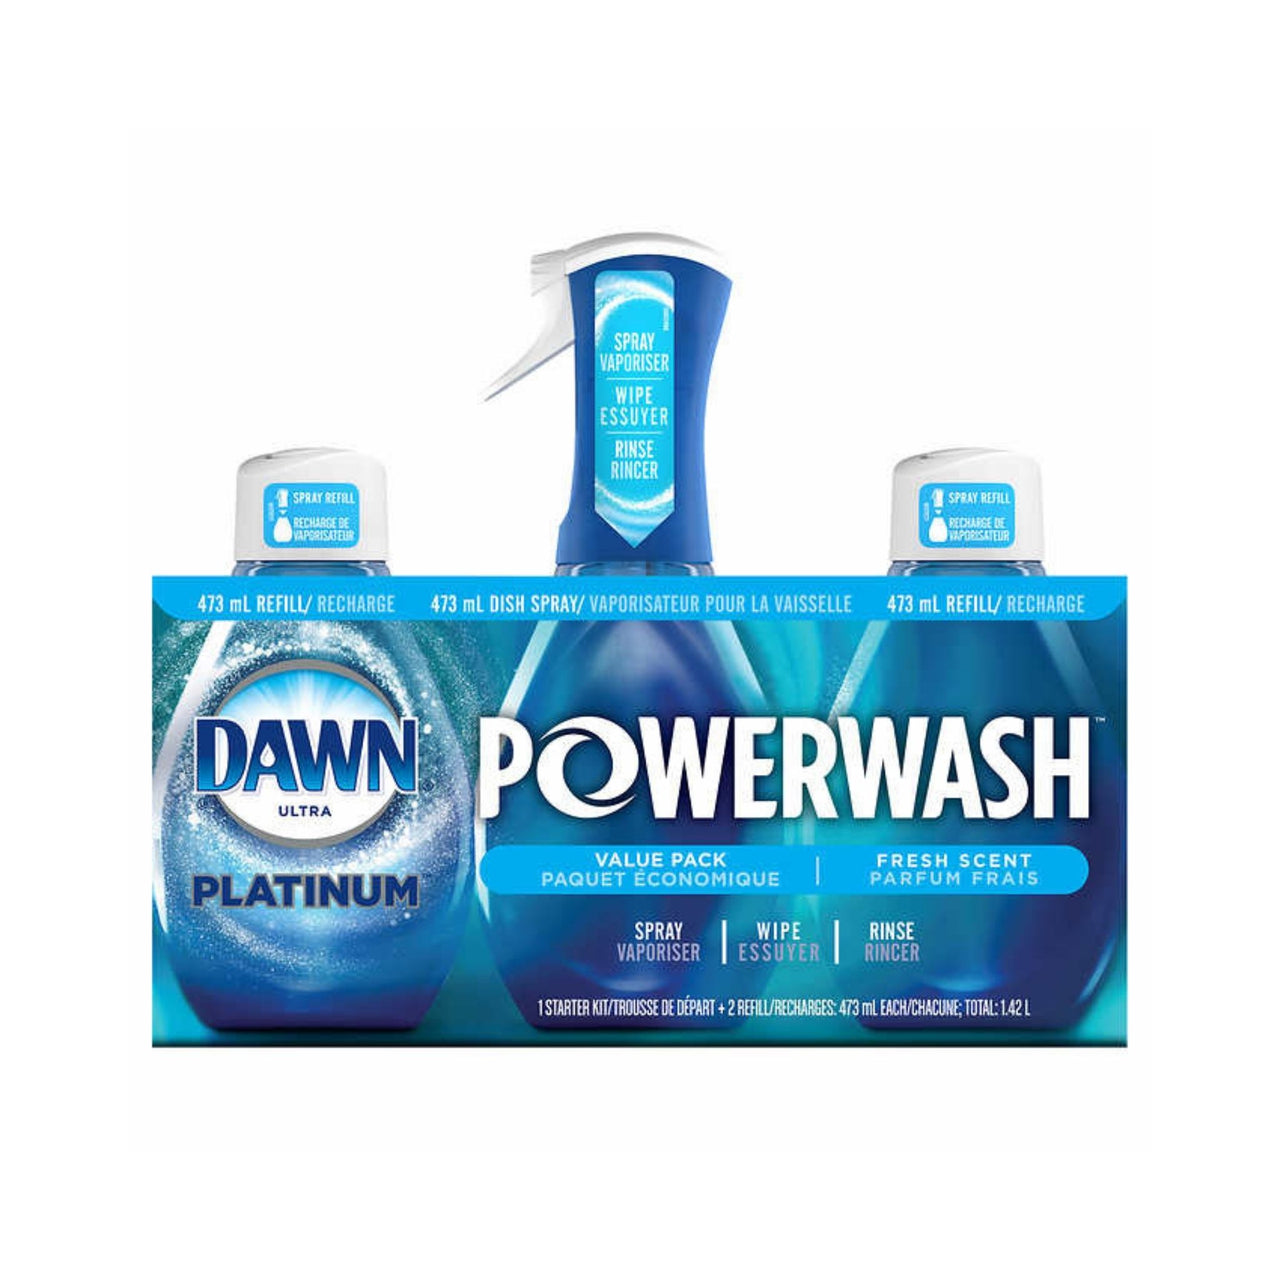 Image of Dawn Platinum Powerwash Dish Spray with Refills